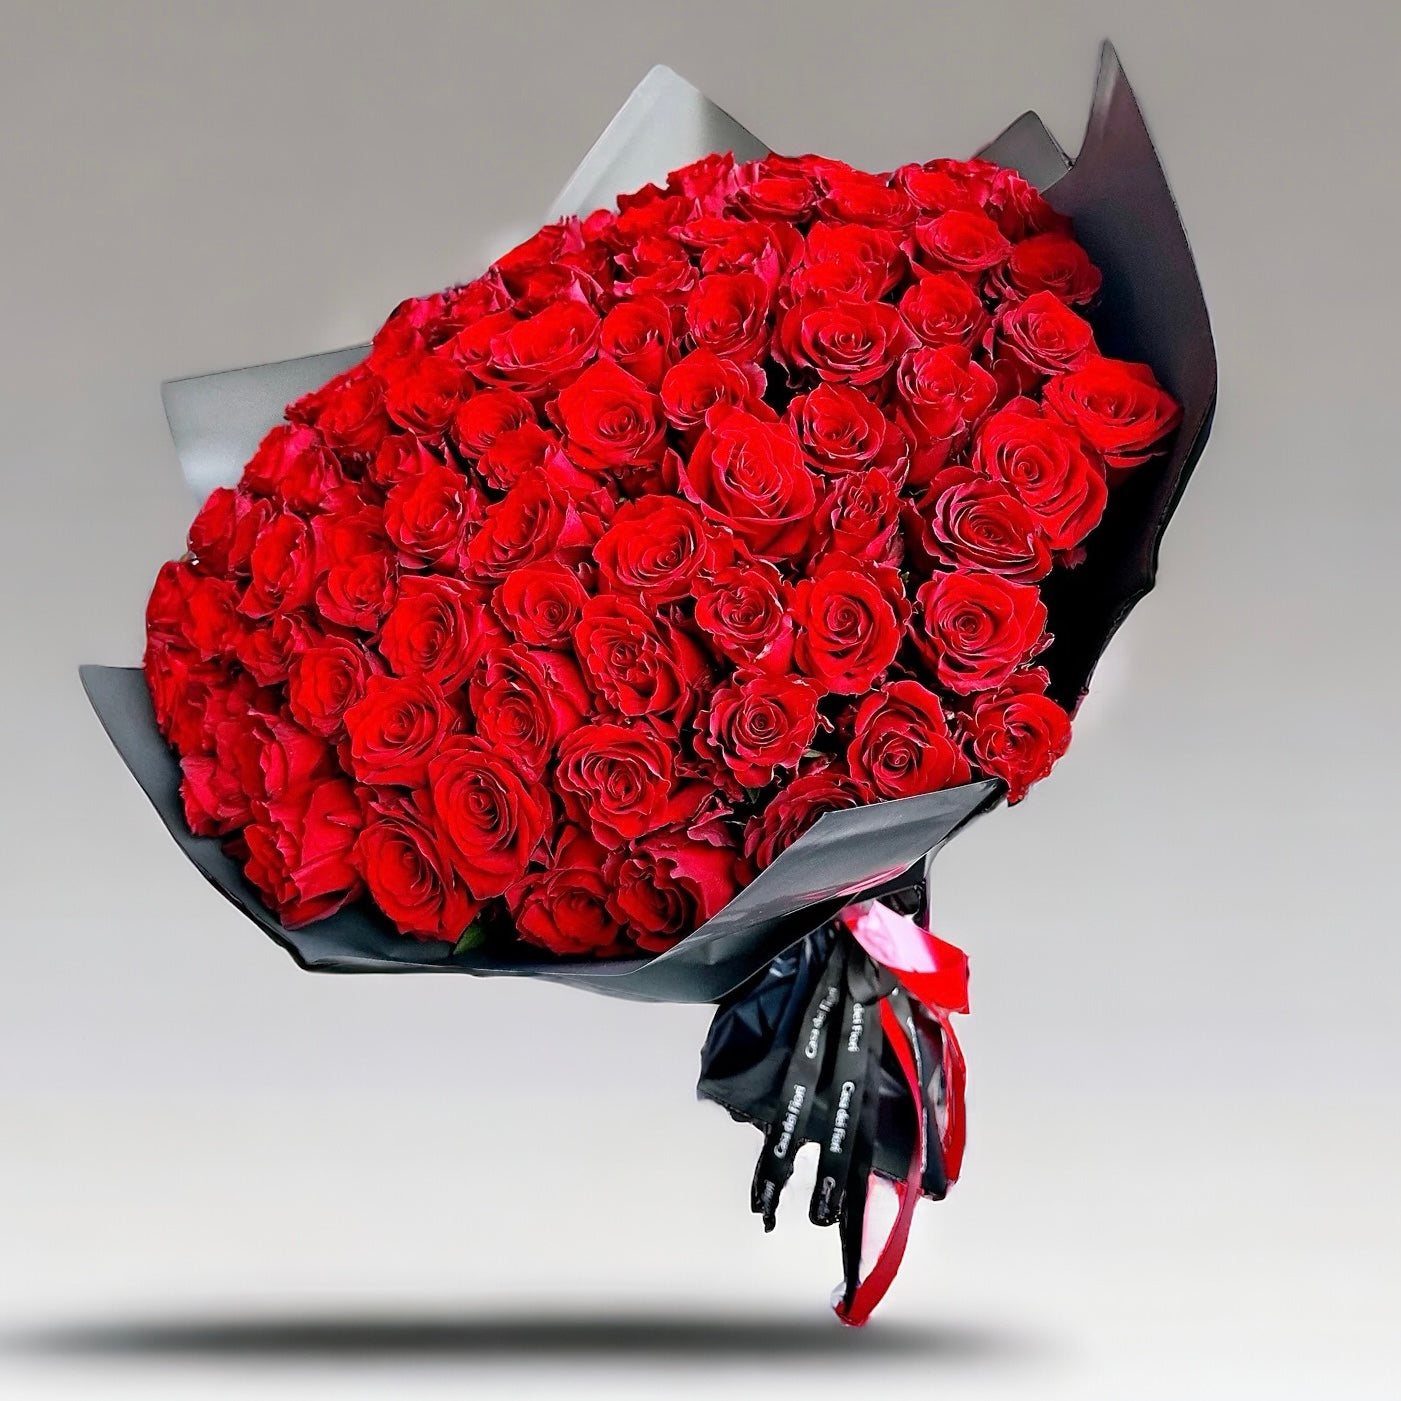 Ultimate Luxury Wrapped Rose Bouquet - DGM Flowers  | Fort Lauderdale Florist